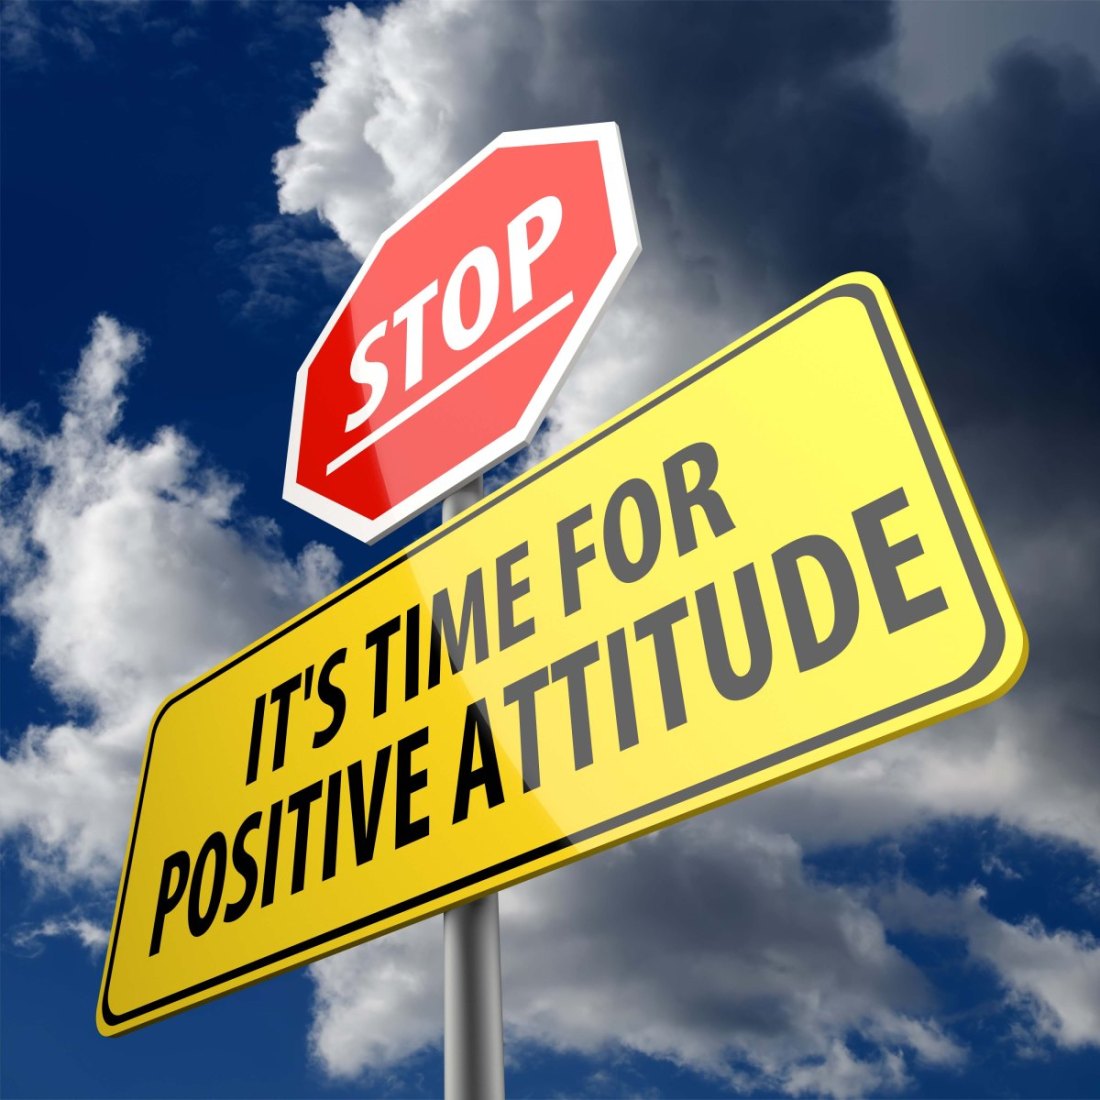 positive-attitude